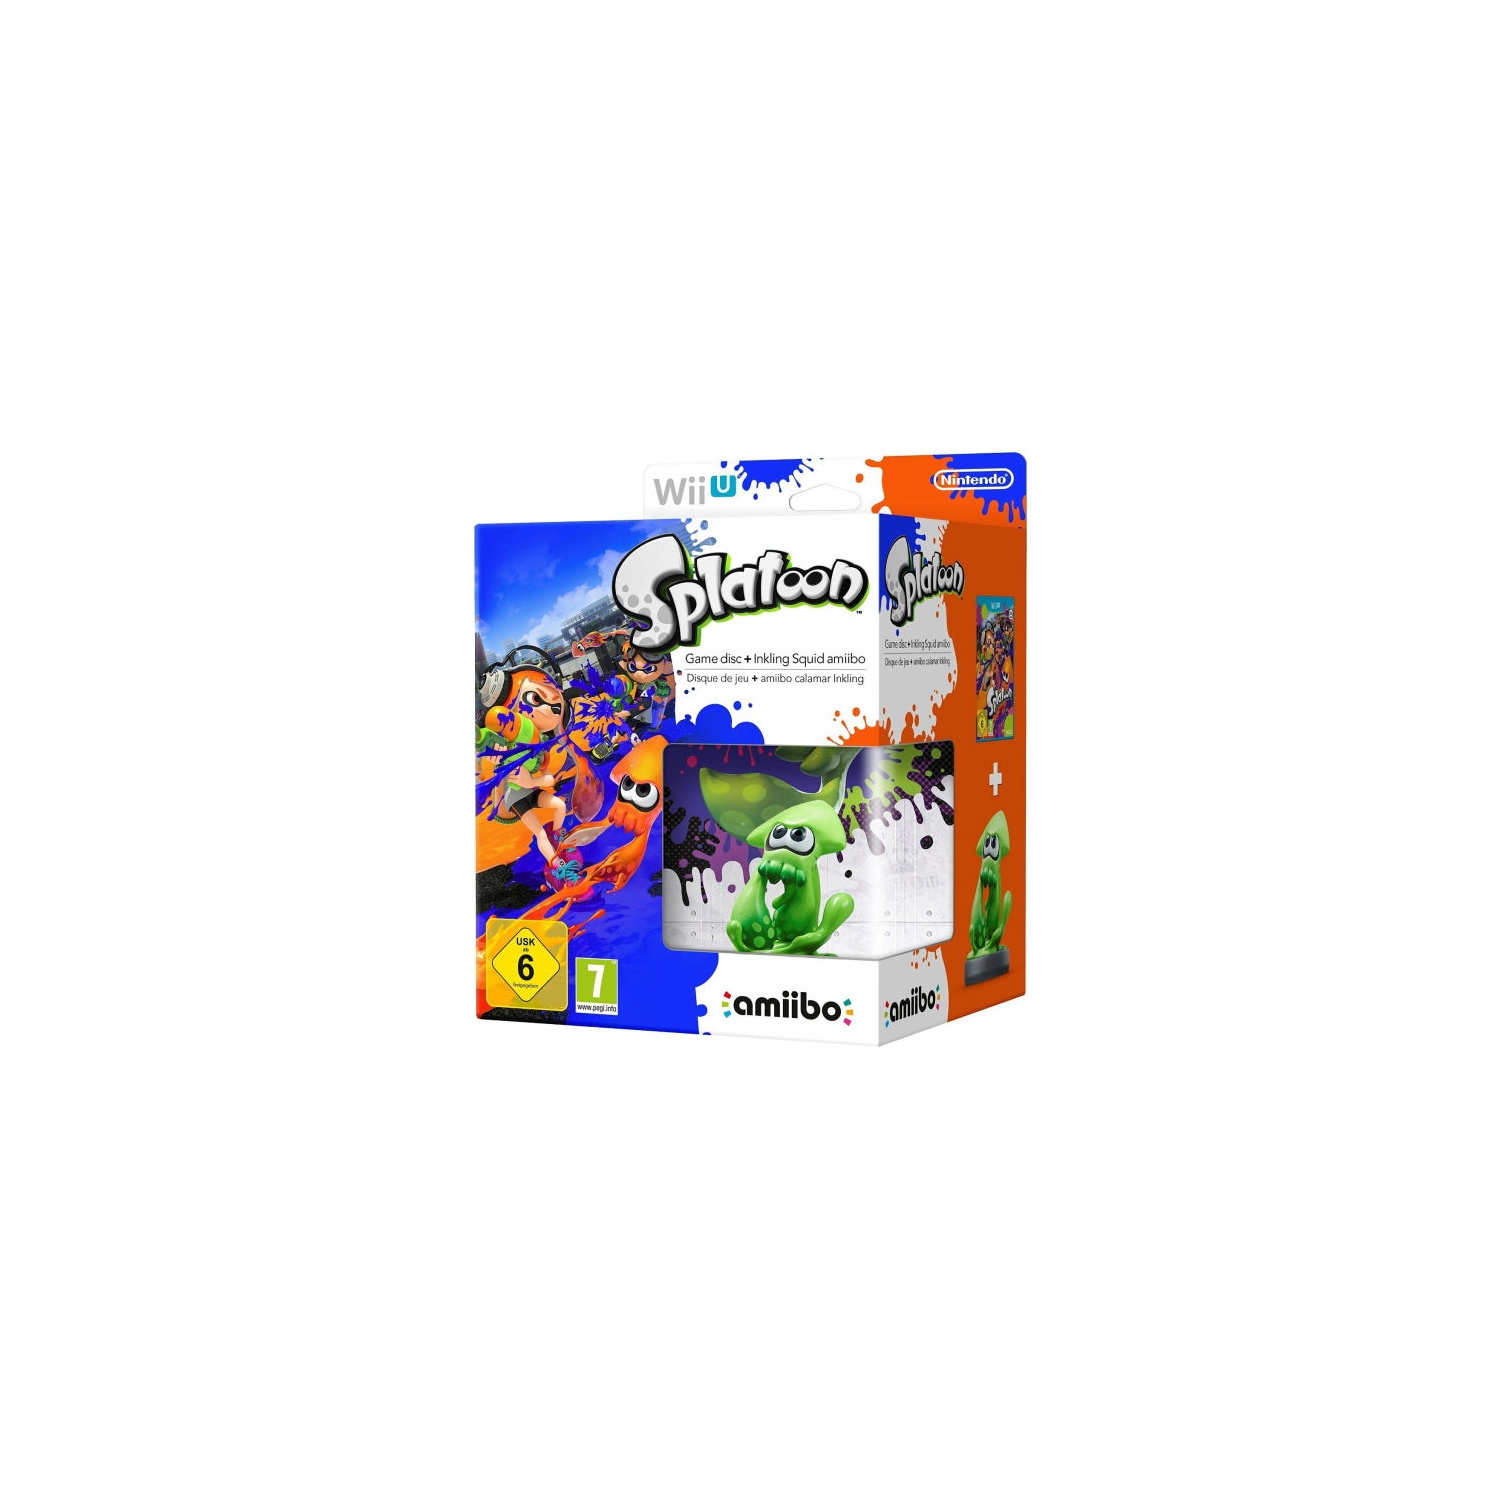 Splatoon - Limited Edition Bundle w/ Inkling Squid amiibo [Nintendo Wii U]